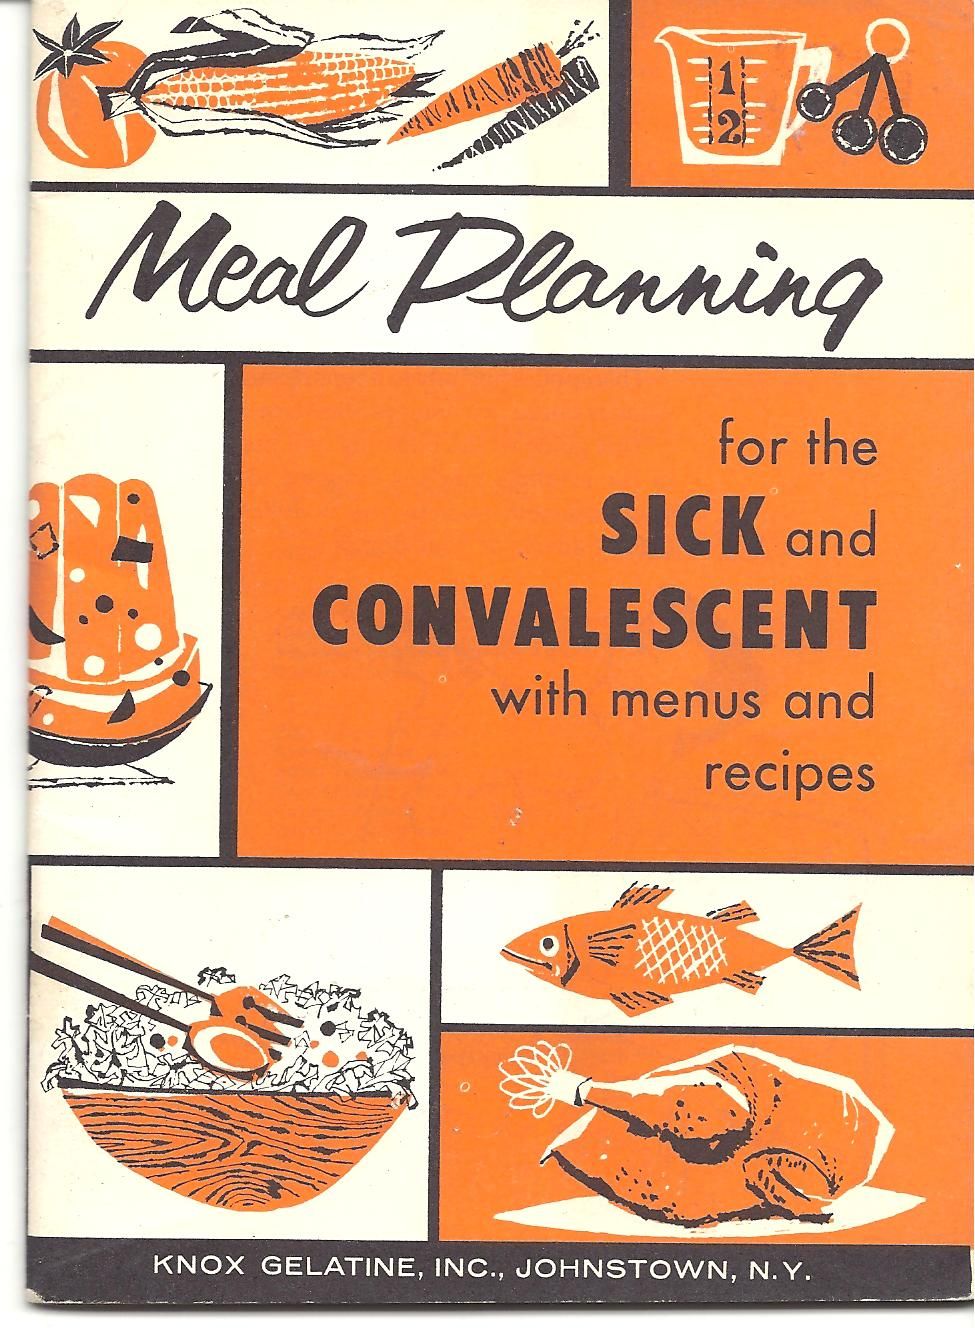 cookbook clipart meal plan